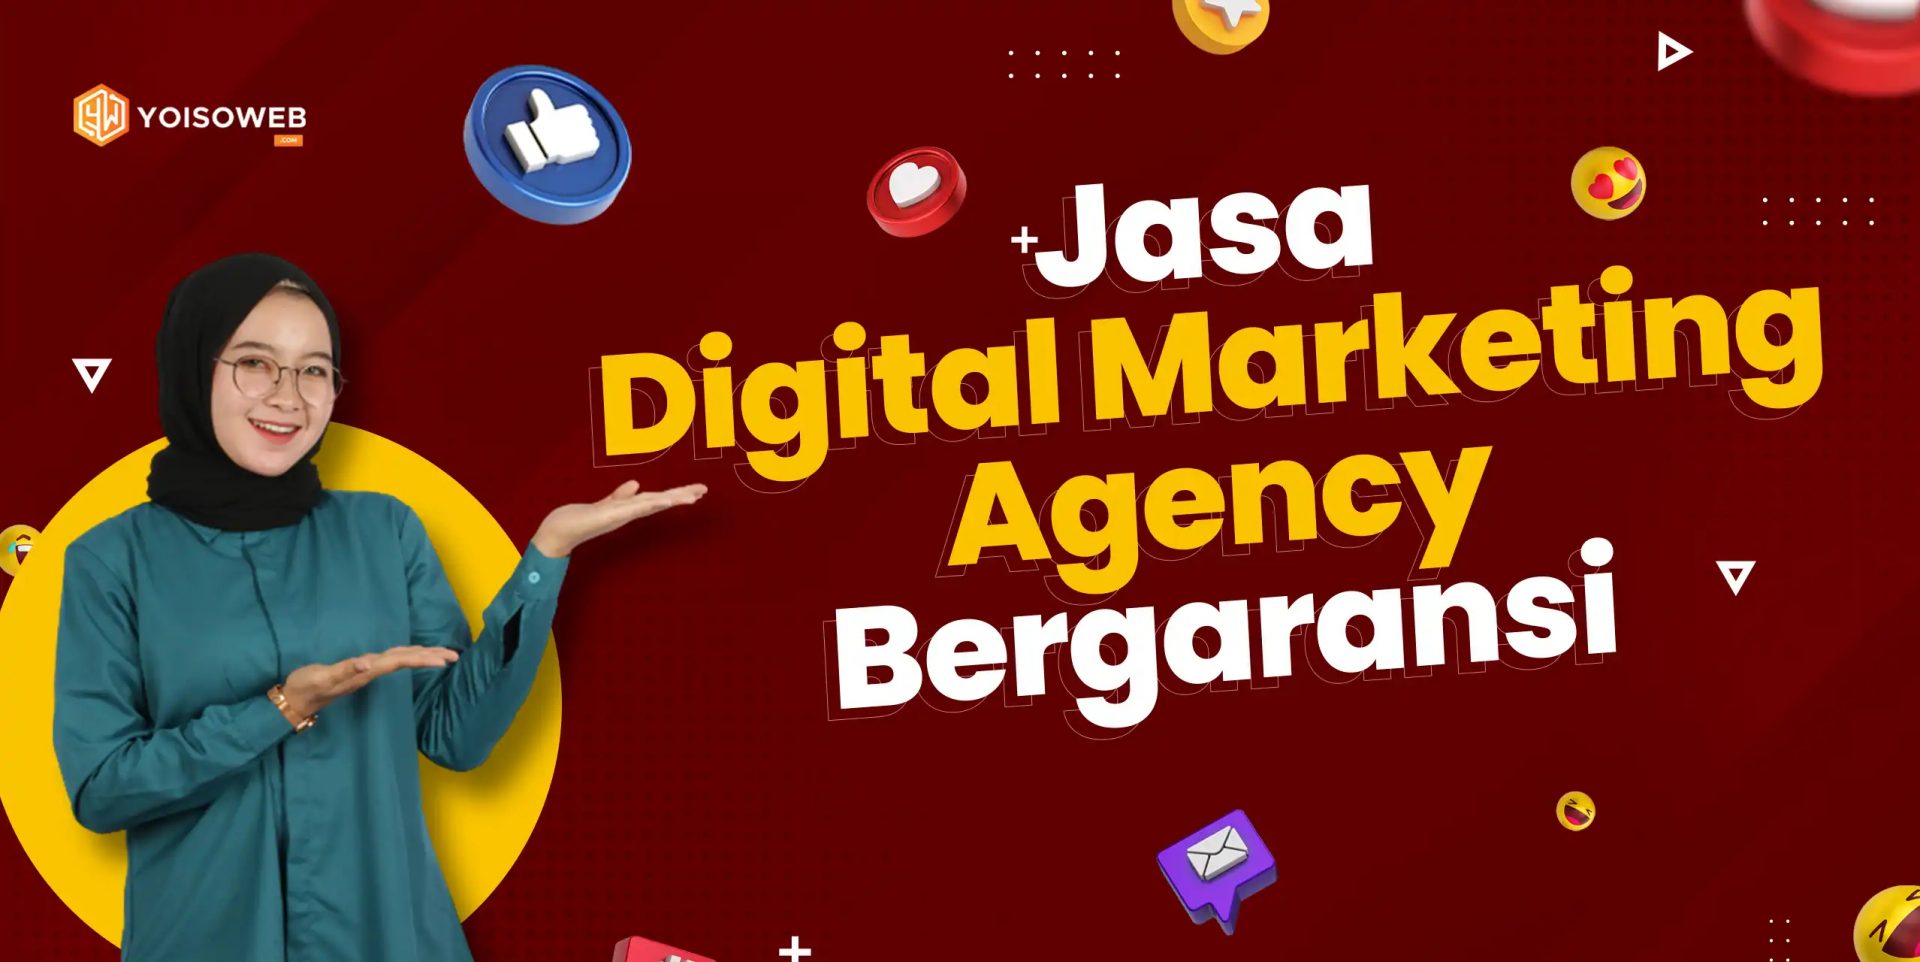 Jasa Digital Marketing Agency Bergaransi - Yoisoweb